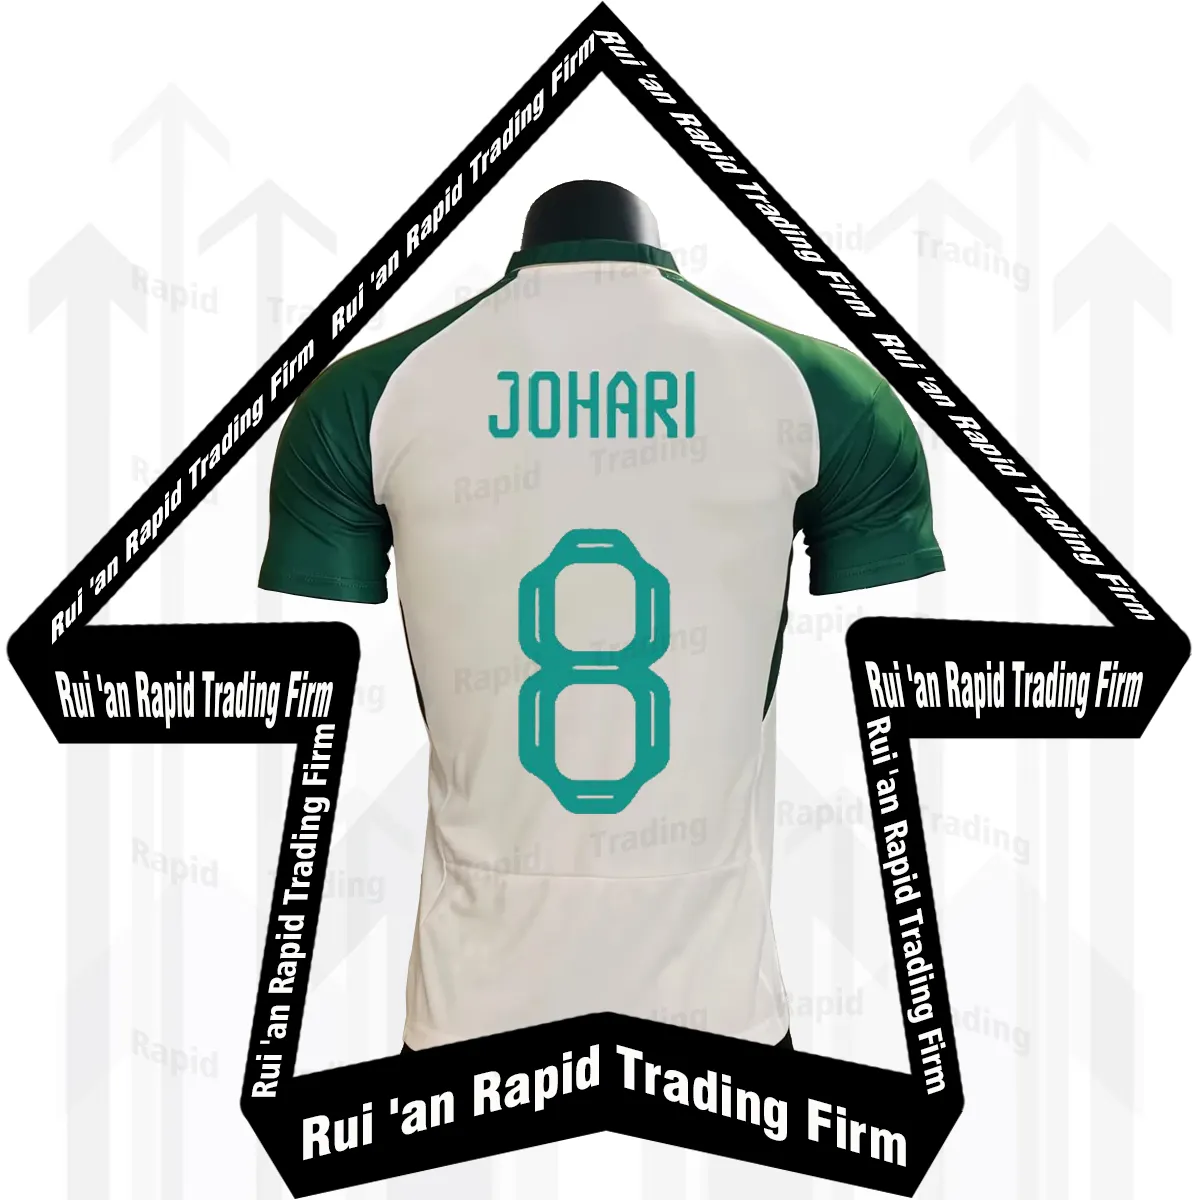 शीर्ष थाई गुणवत्ता फुटबॉल जर्सी फुटबॉल क्लब प्रशंसकों खिलाड़ी संस्करण फुटबॉल जर्सी सऊदी अरब उत्पादों खेल वर्दी प्रशिक्षण पहनने